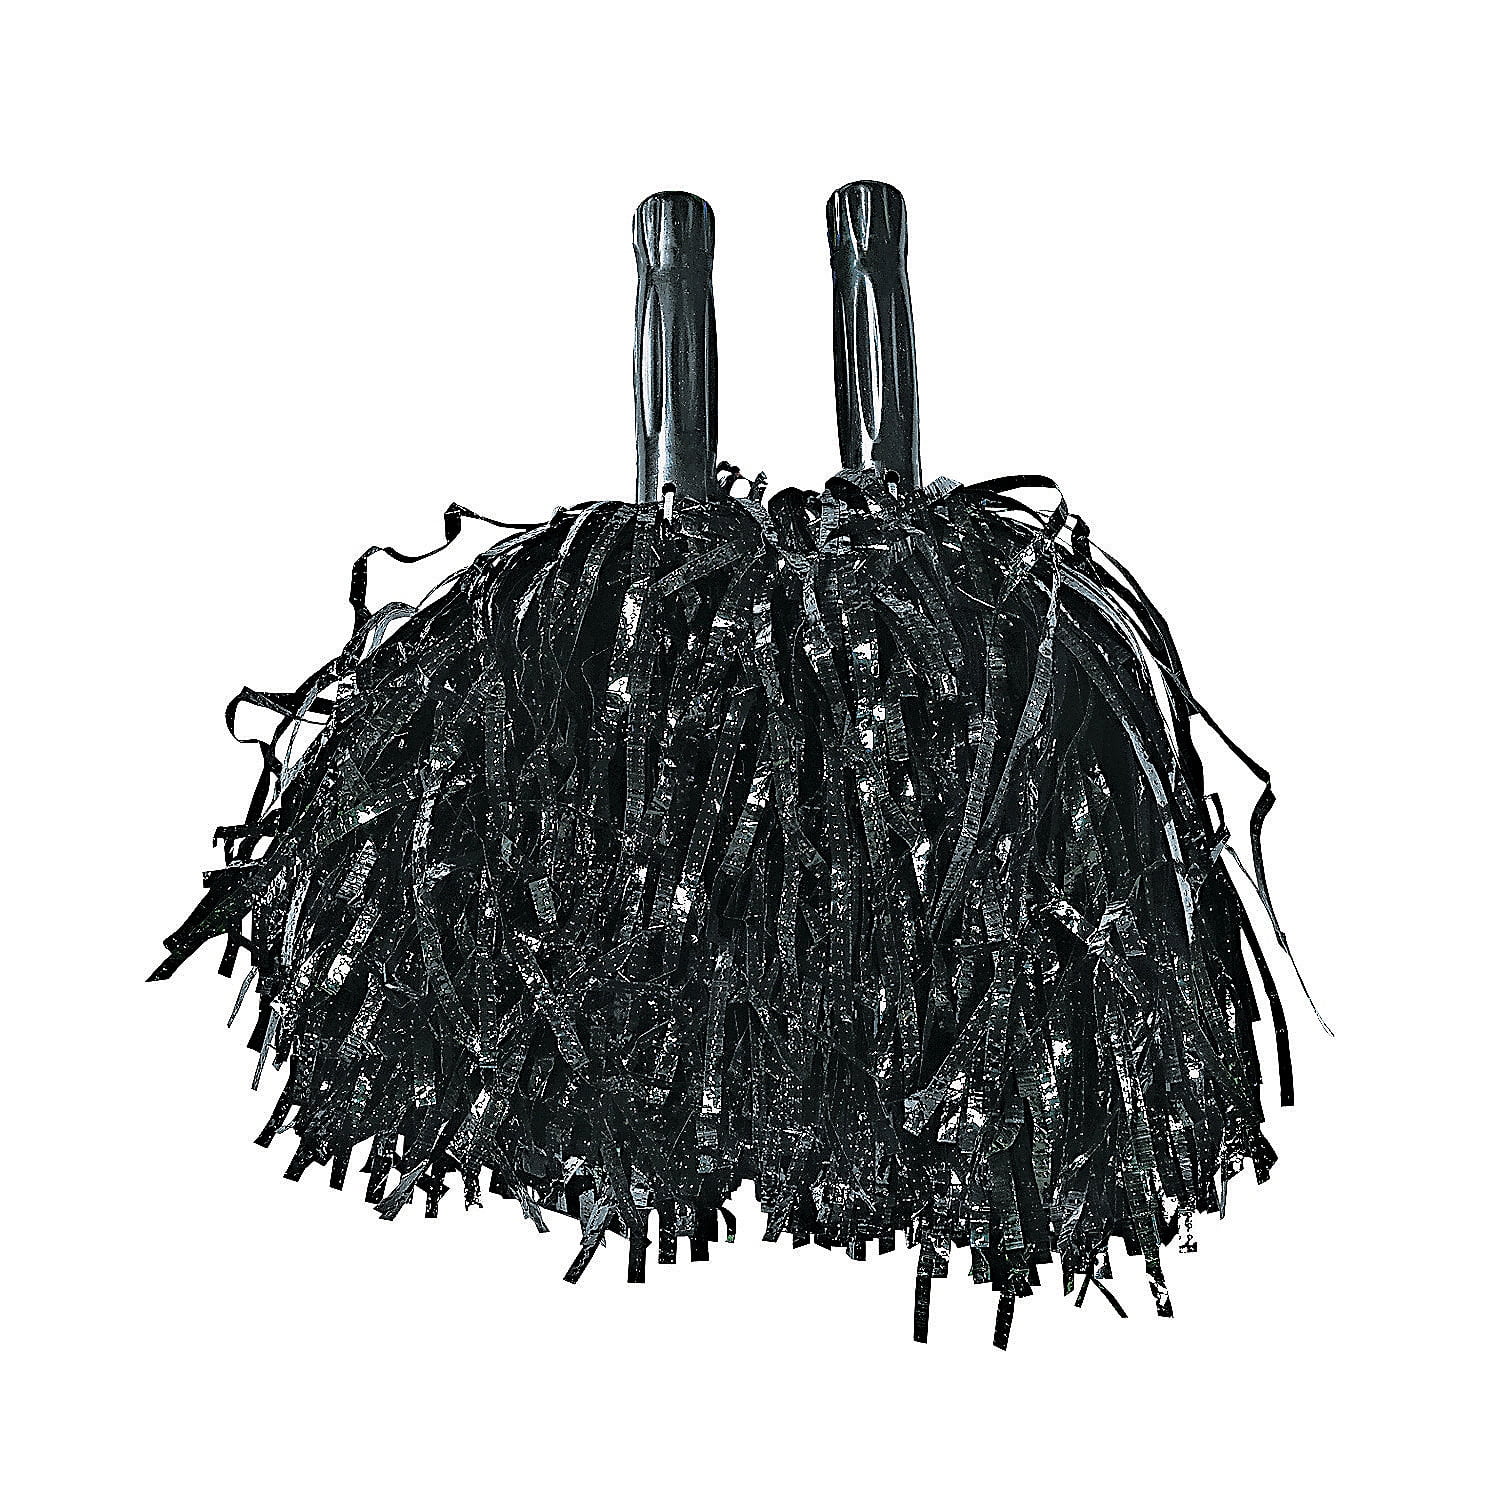 The Crafts Outlet Chenille Sparkly Pom Poms, Black Porcupine, 0.5-inch  (12-mm), 50-pc, Black